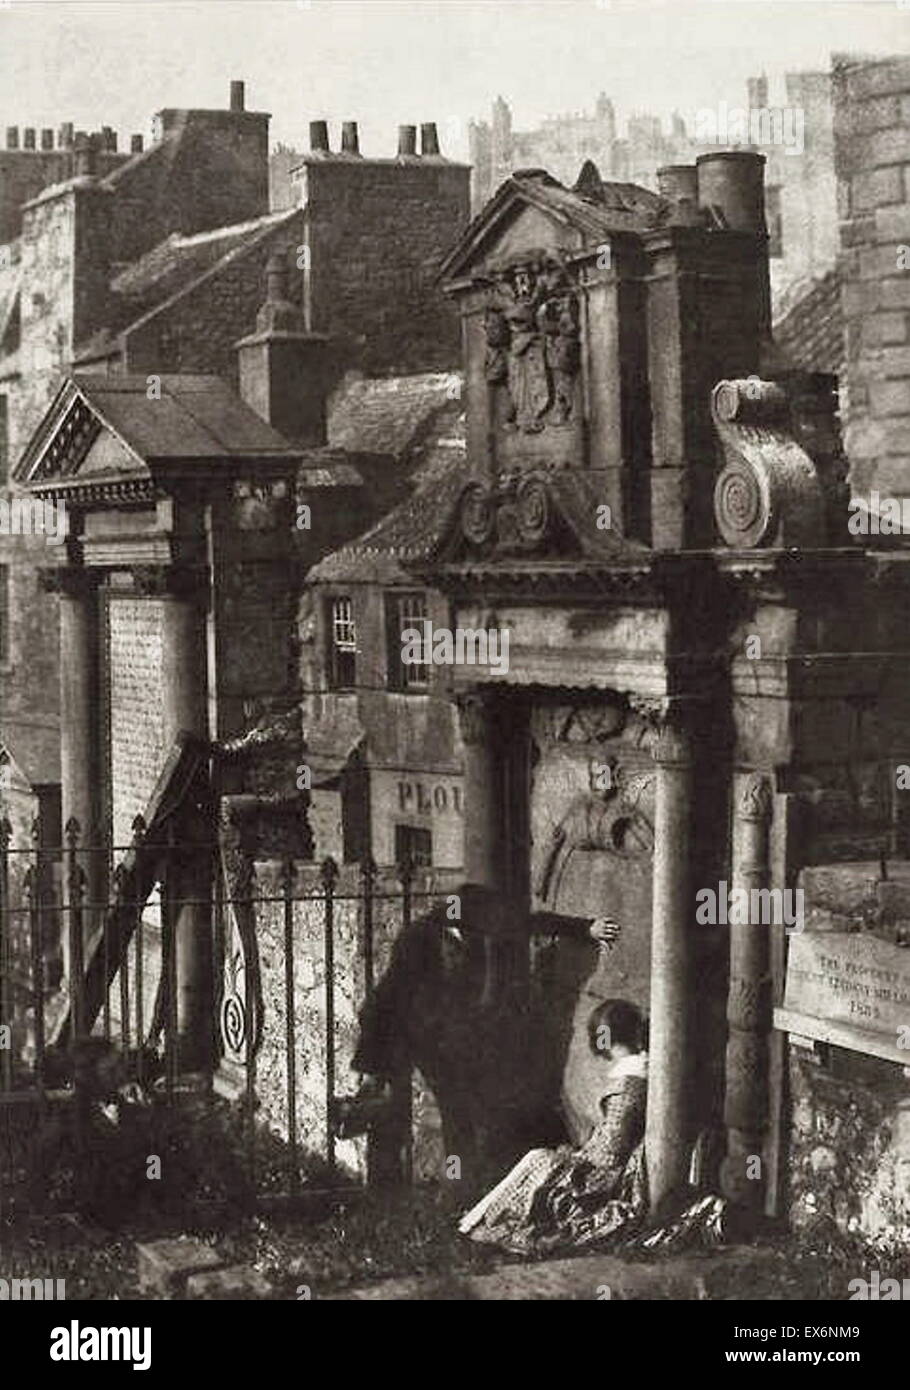 a Covenanter’s Tomb, Greyfriars Churchyard, Edinburgh, c. 1843-1847 photograph by David Octavius Hill and Robert Adamson Stock Photo